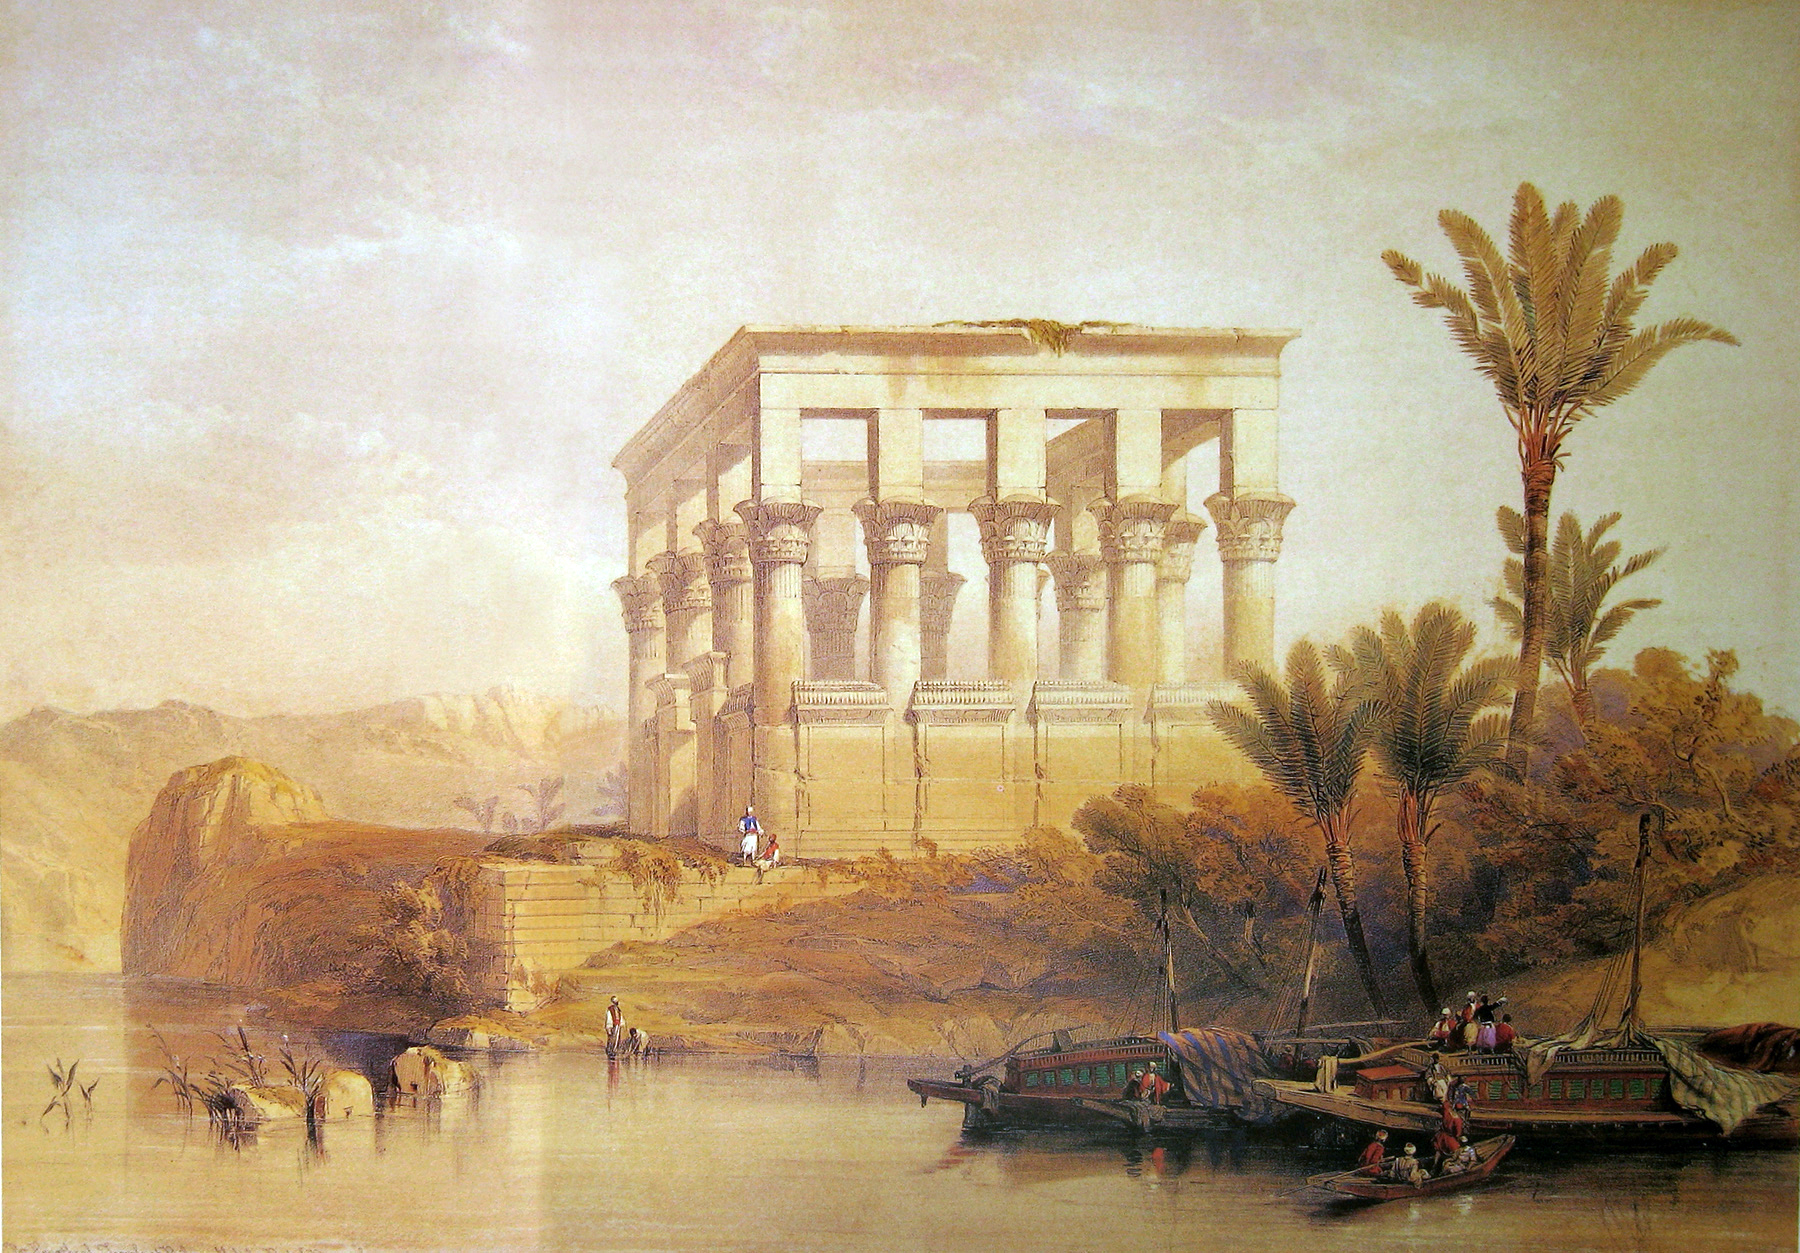 Slika:David Roberts Hypaethral Temple Philae.jpg - Wikipedija, prosta enciklopedija